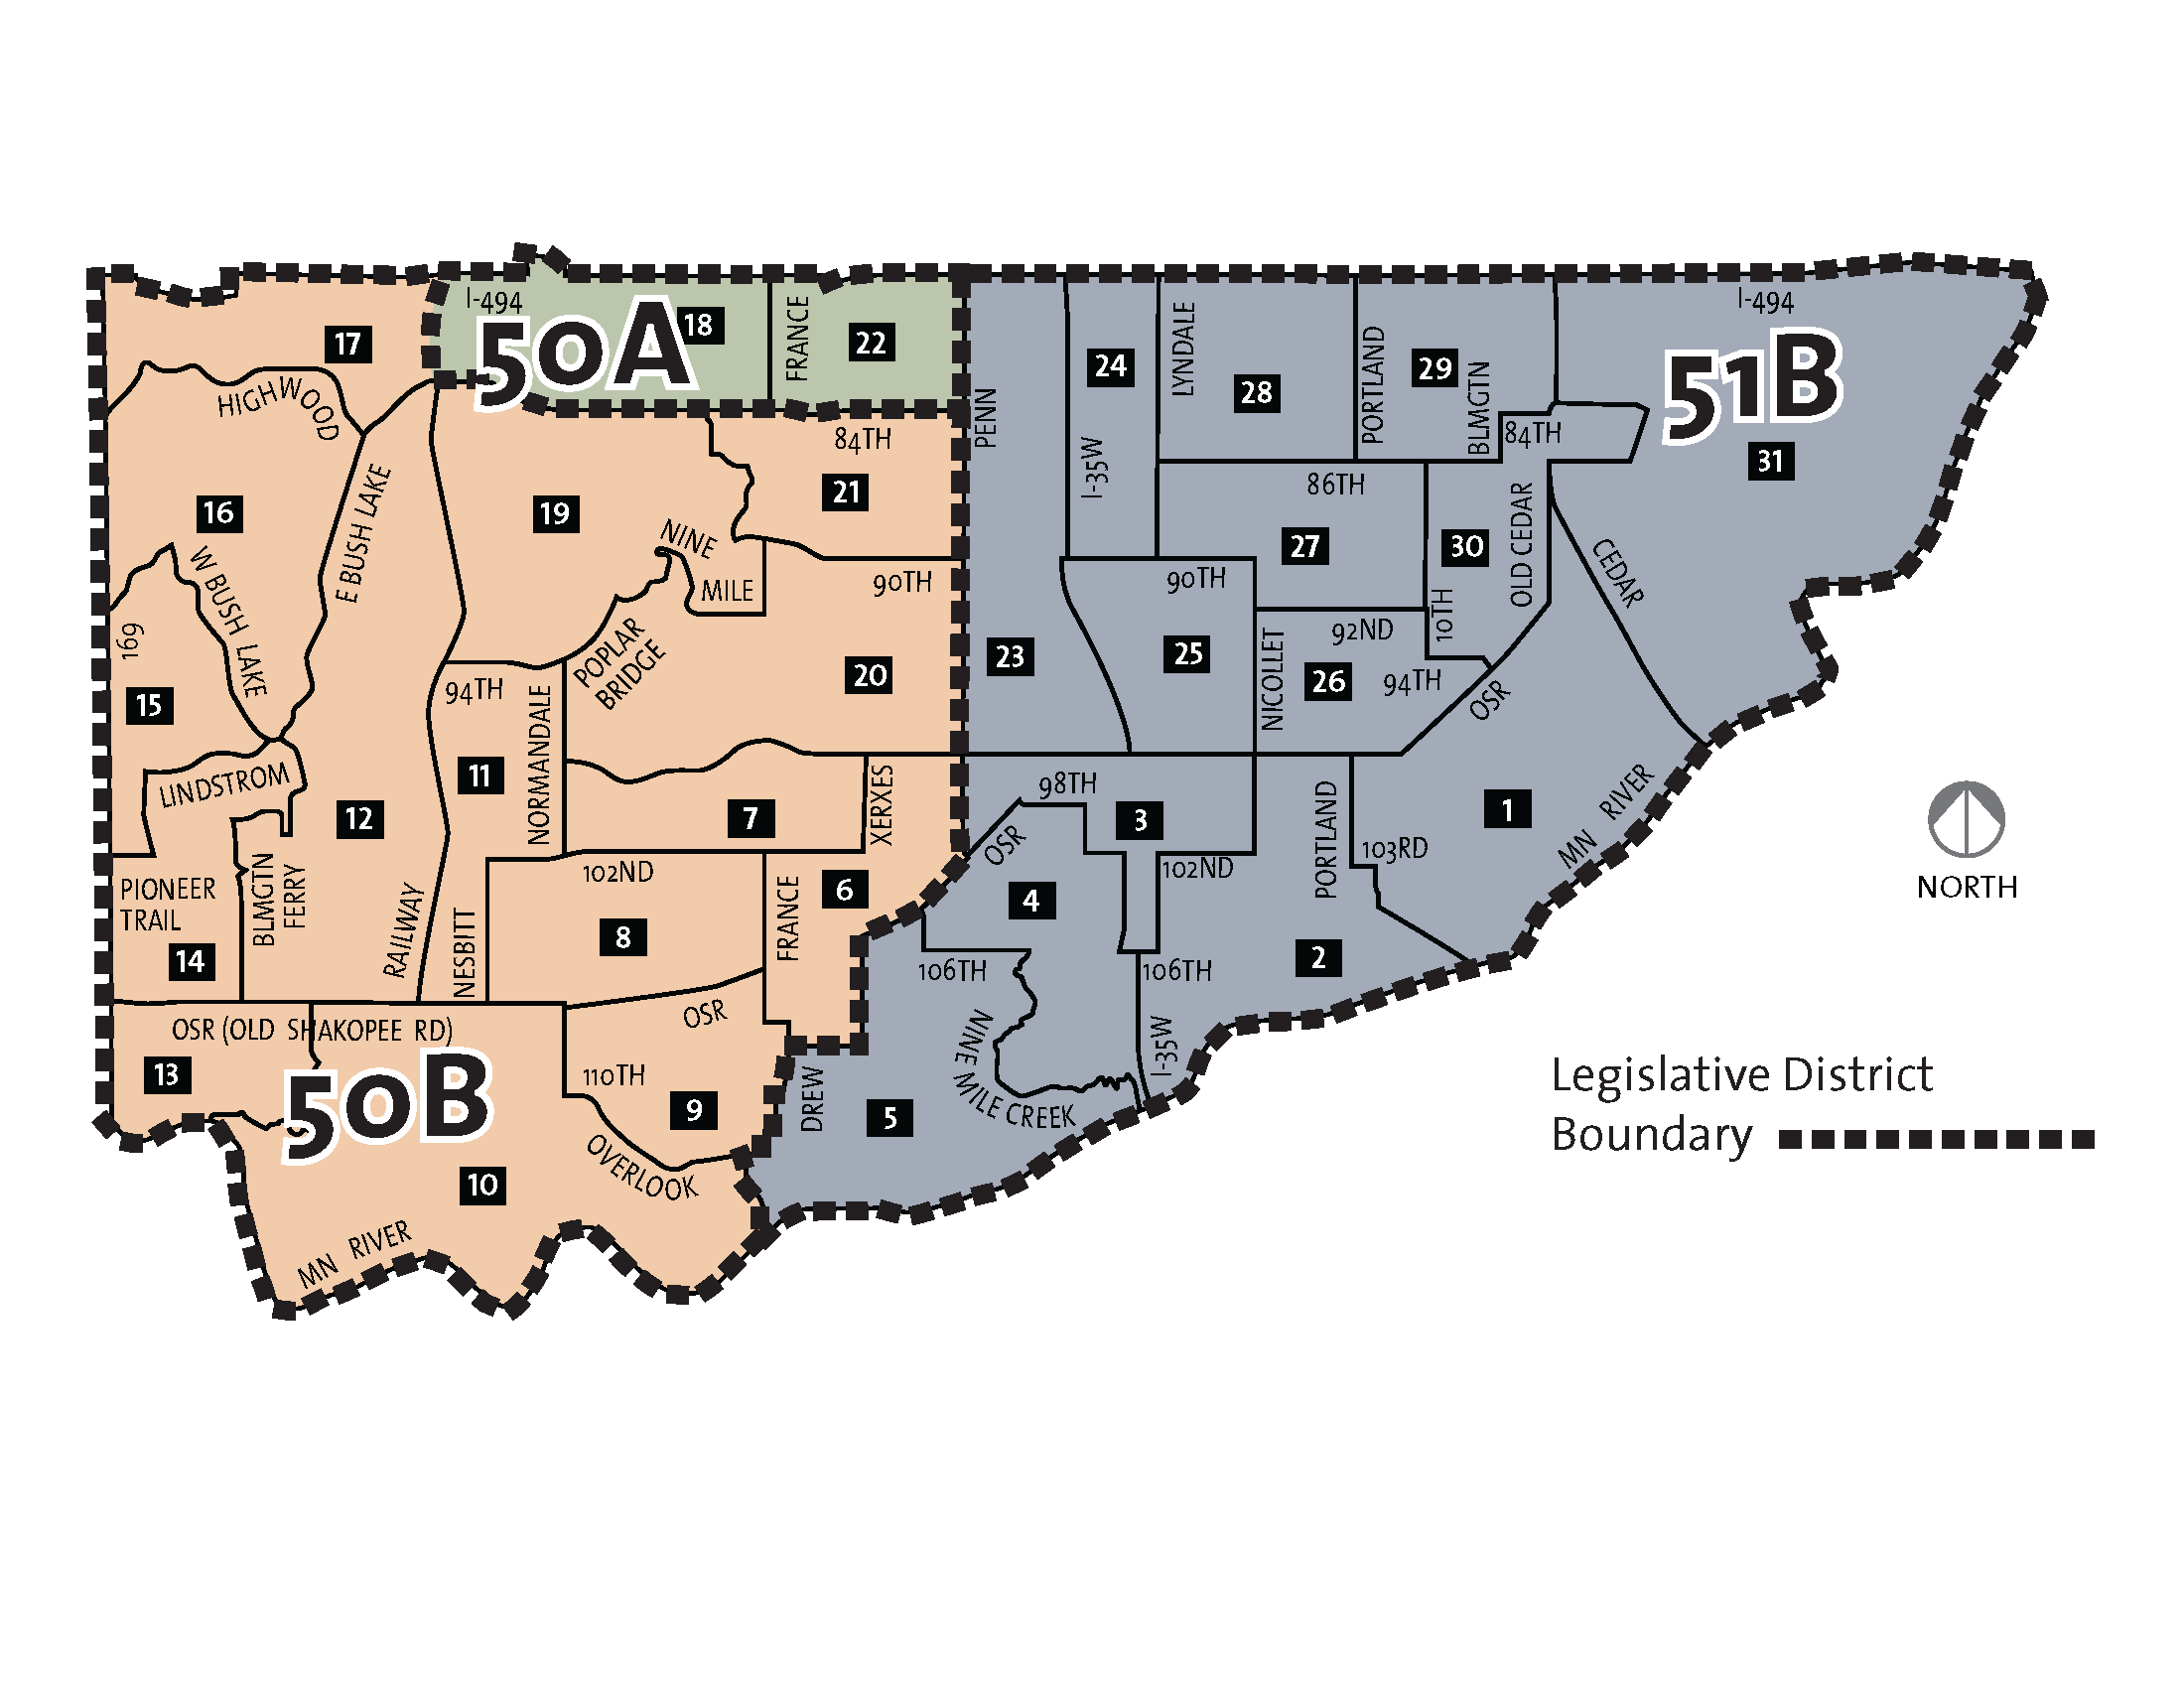 Legislative districts and precincts